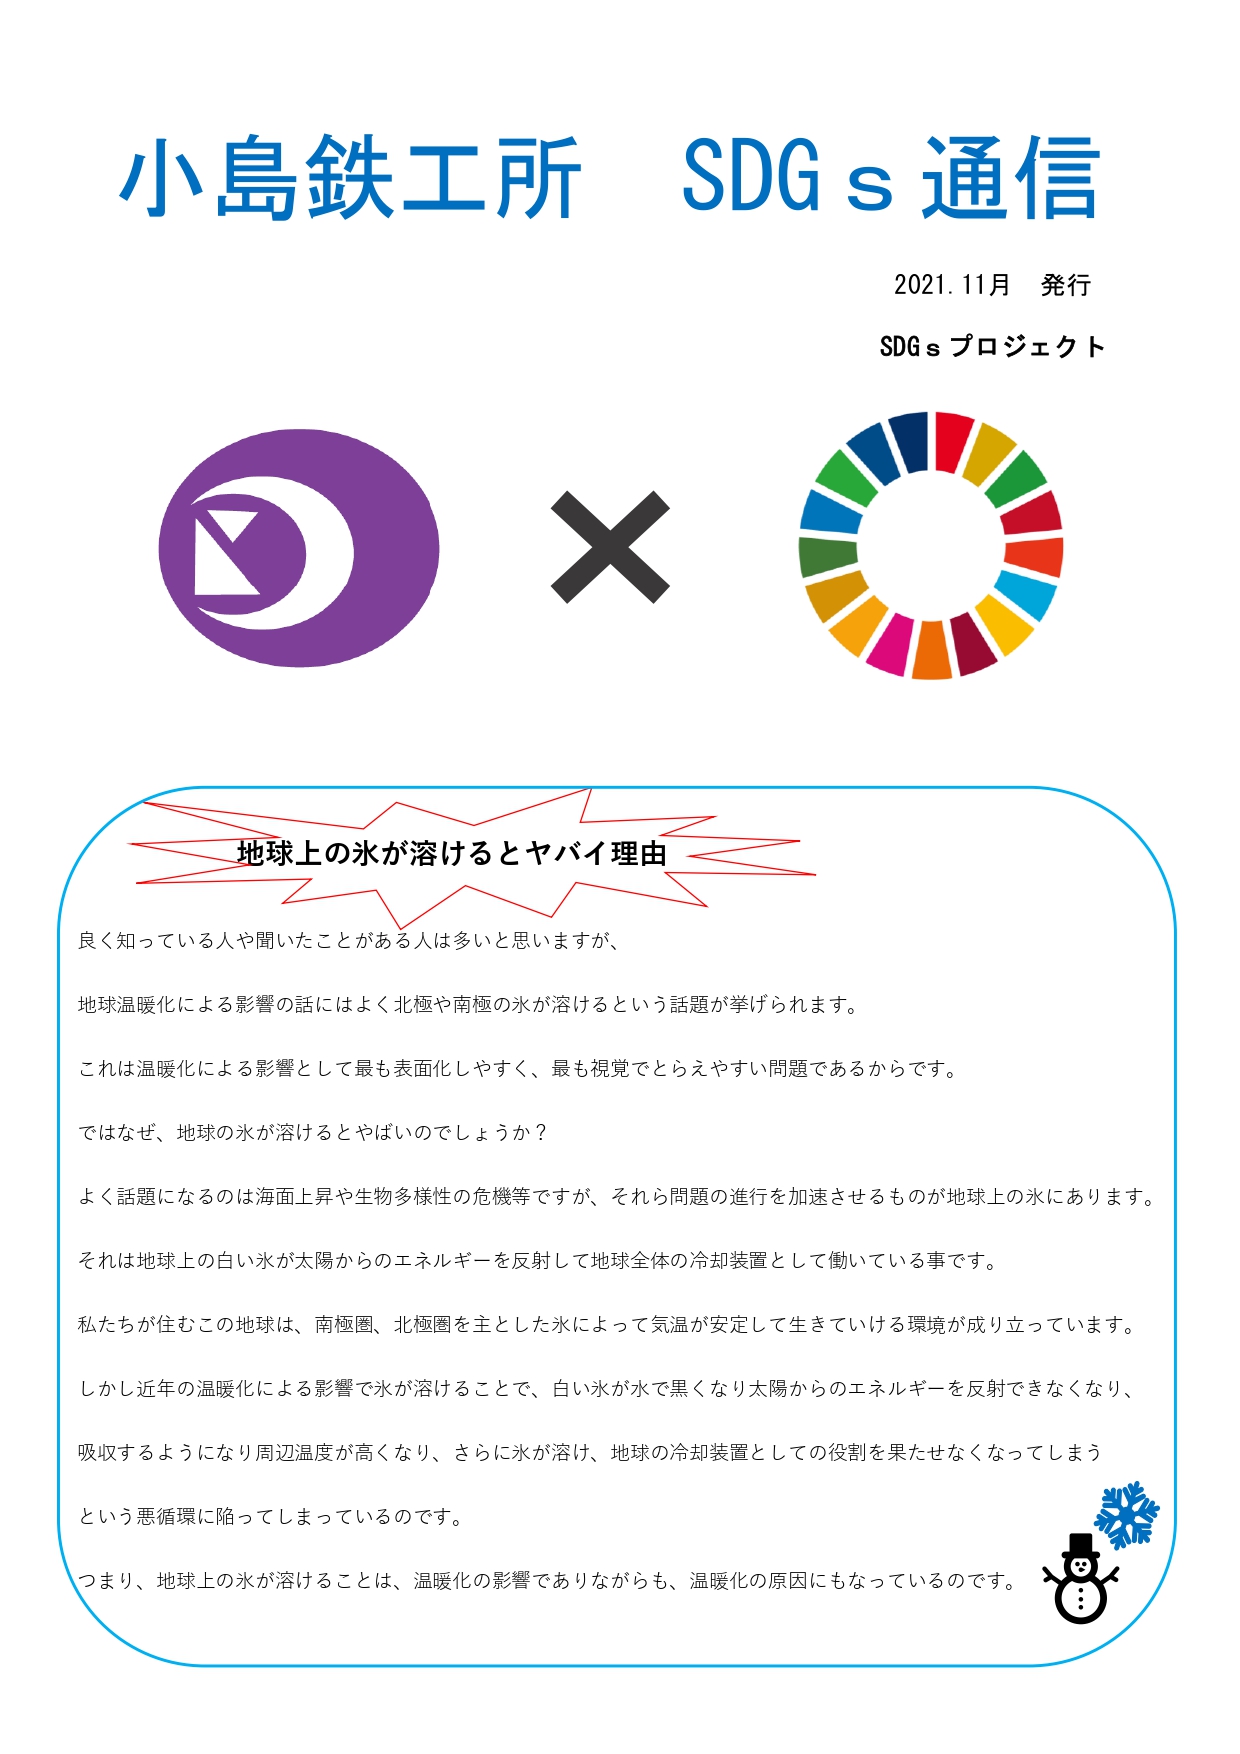 SDGs社内報